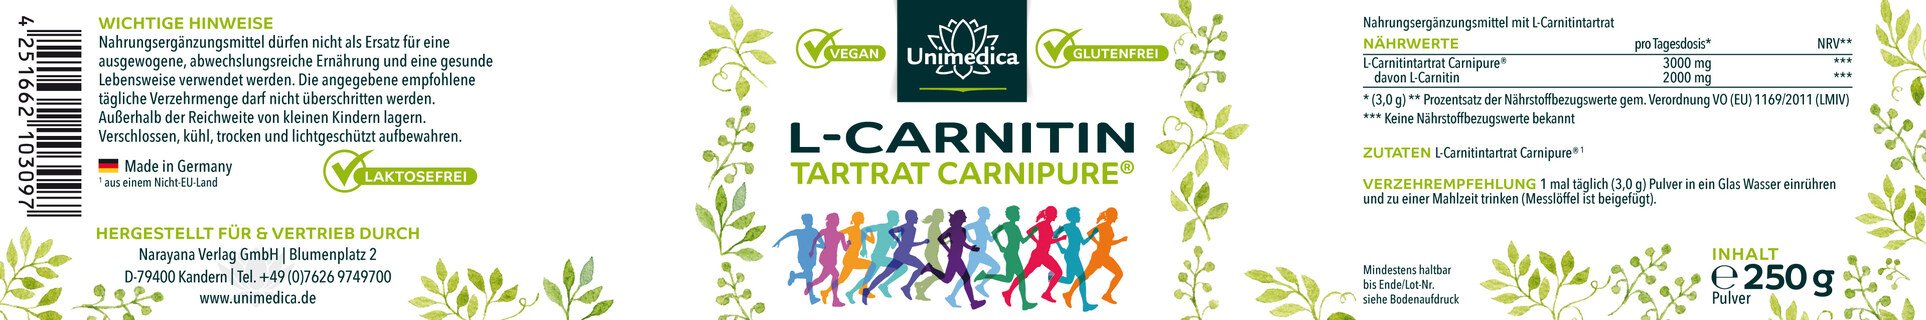 Tartrate de L-carnitine Carnipure® - 250 g - par Unimedica